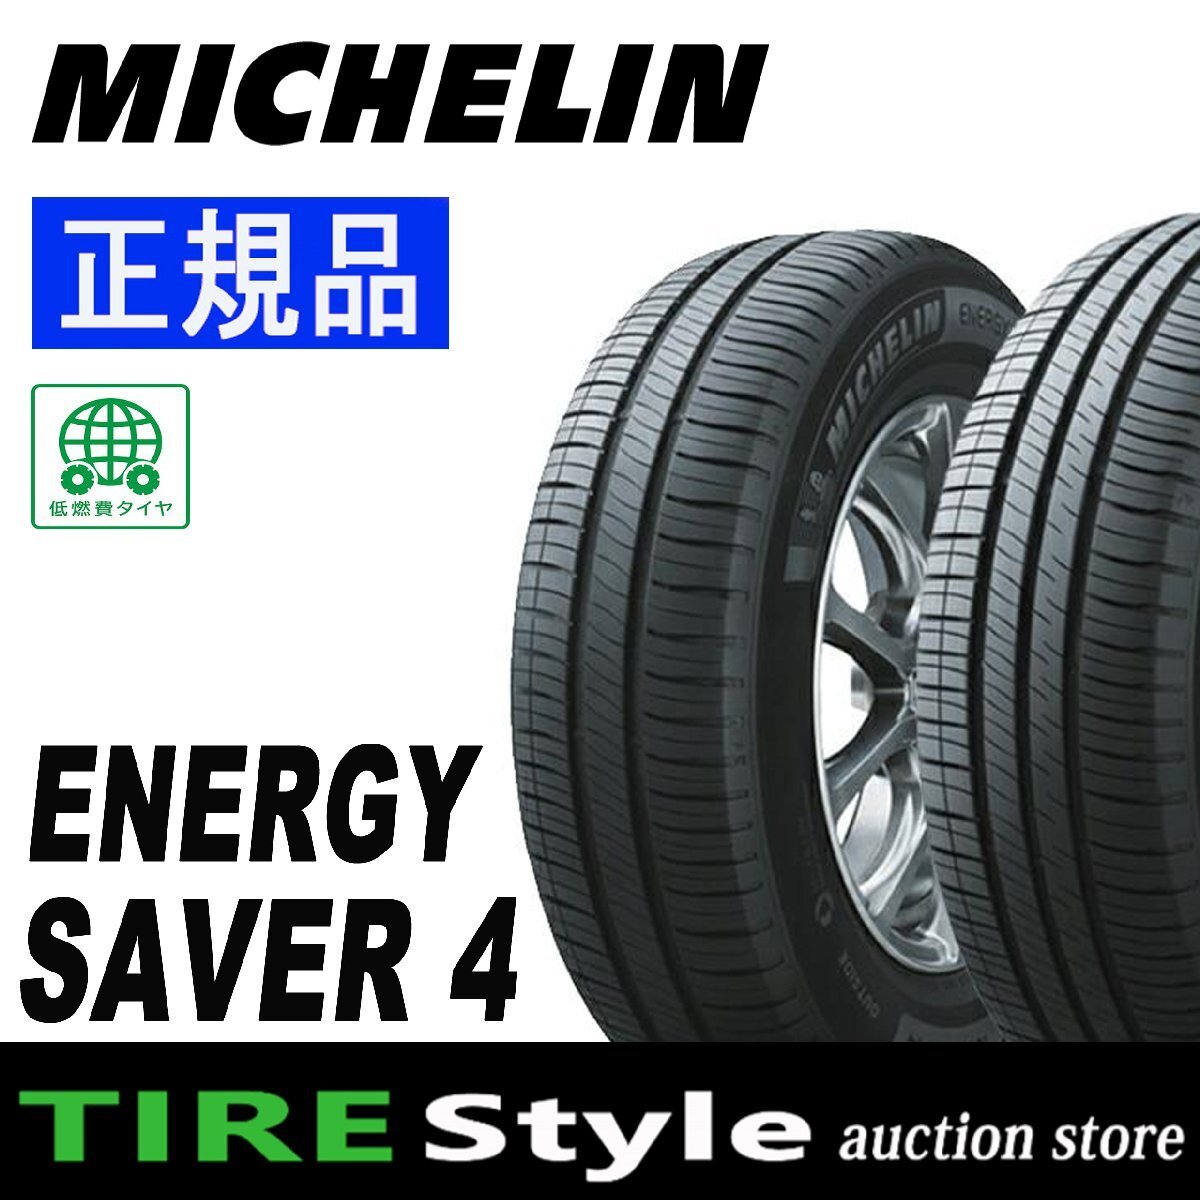 [2 или более заказов ~] ◆ Michelin Energy Sabre 4 175/65R14 86H ◆ Приказное налог на решение включало 4 33 000 иен ~